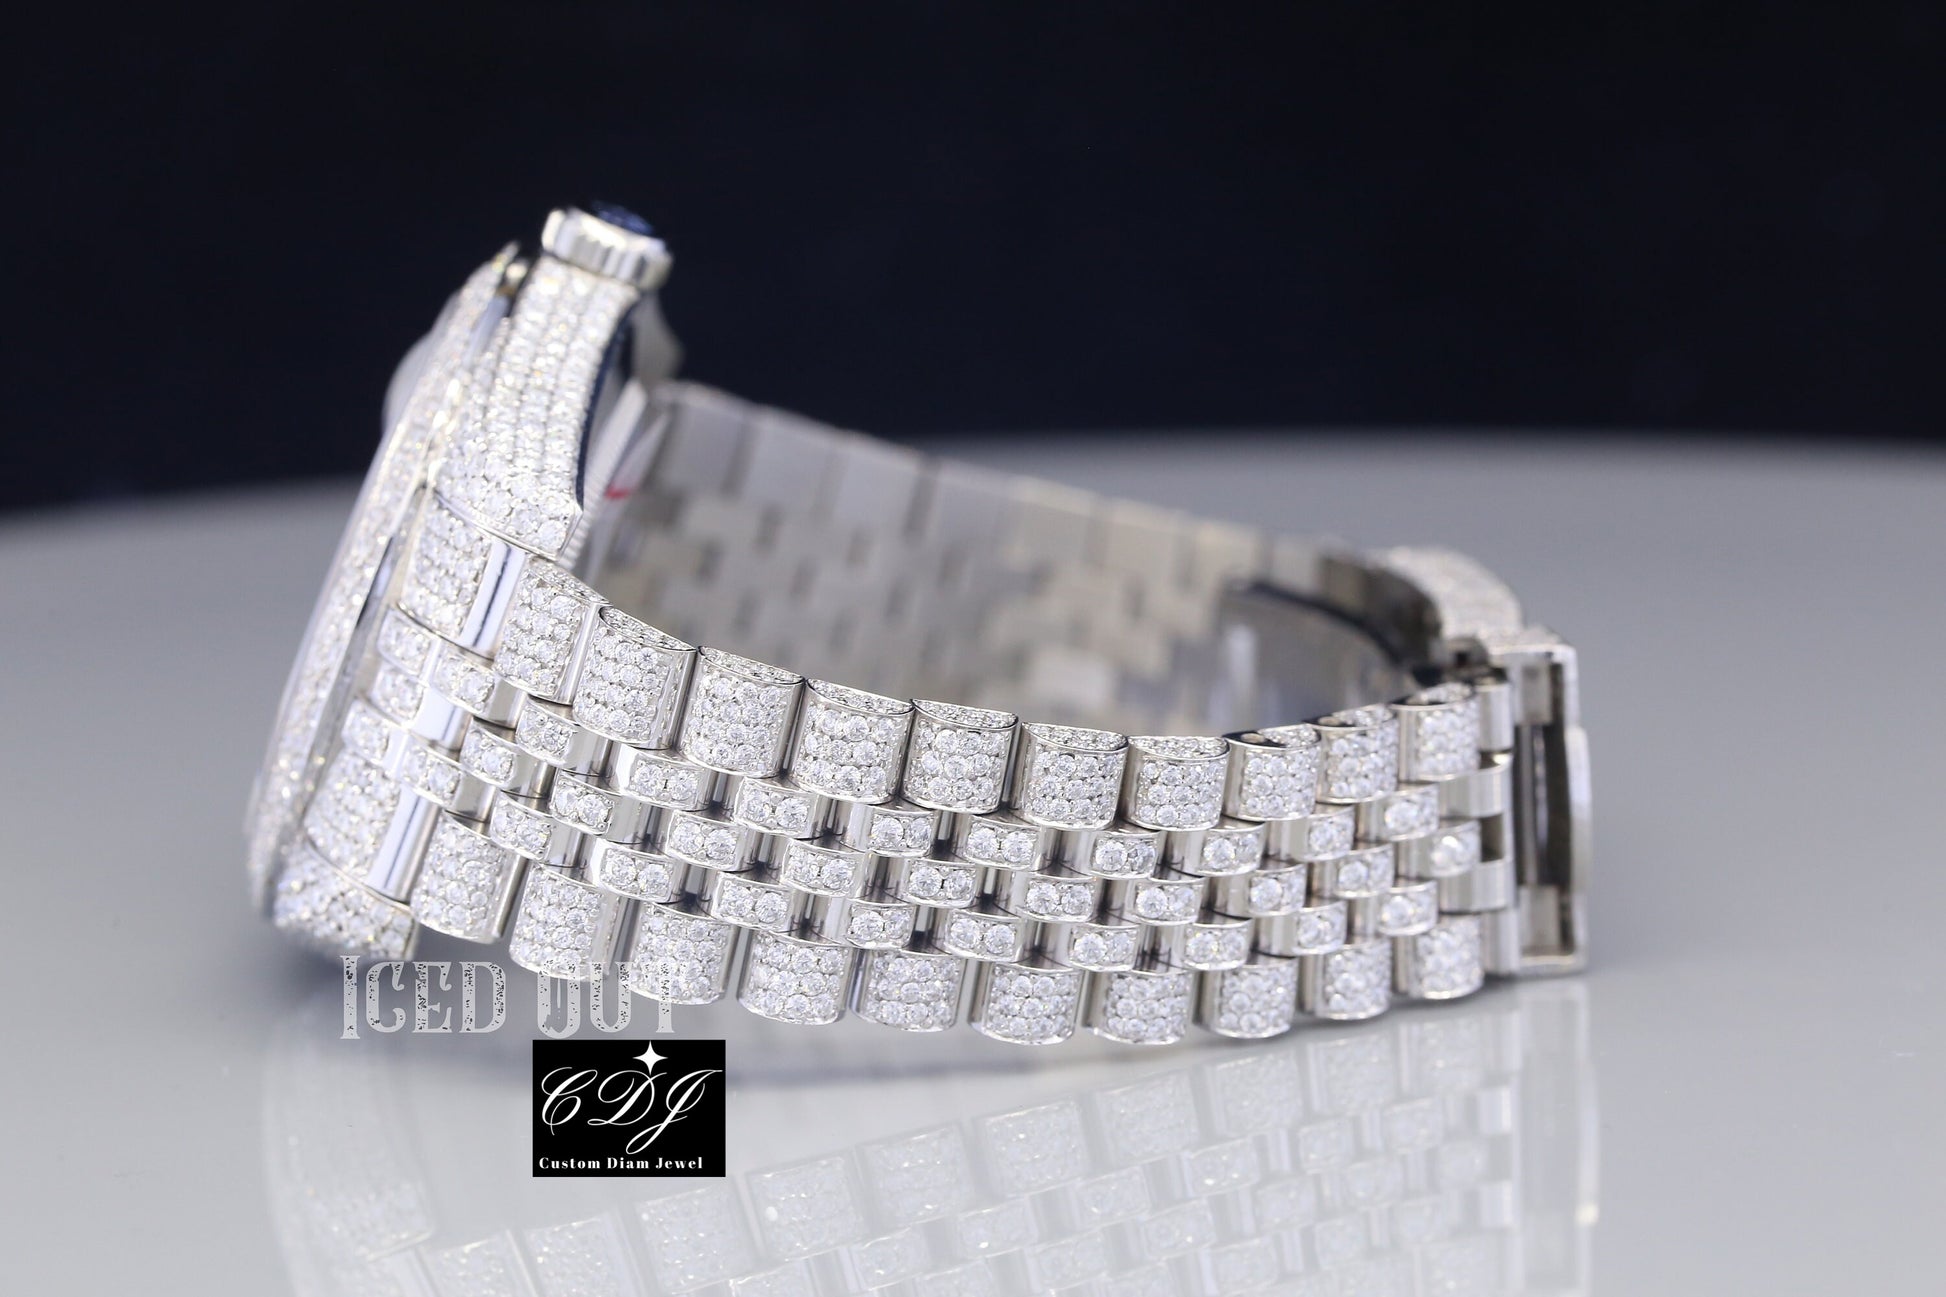 Round Dial Rolex Ice Out Diamond Watch (25CT)  customdiamjewel   